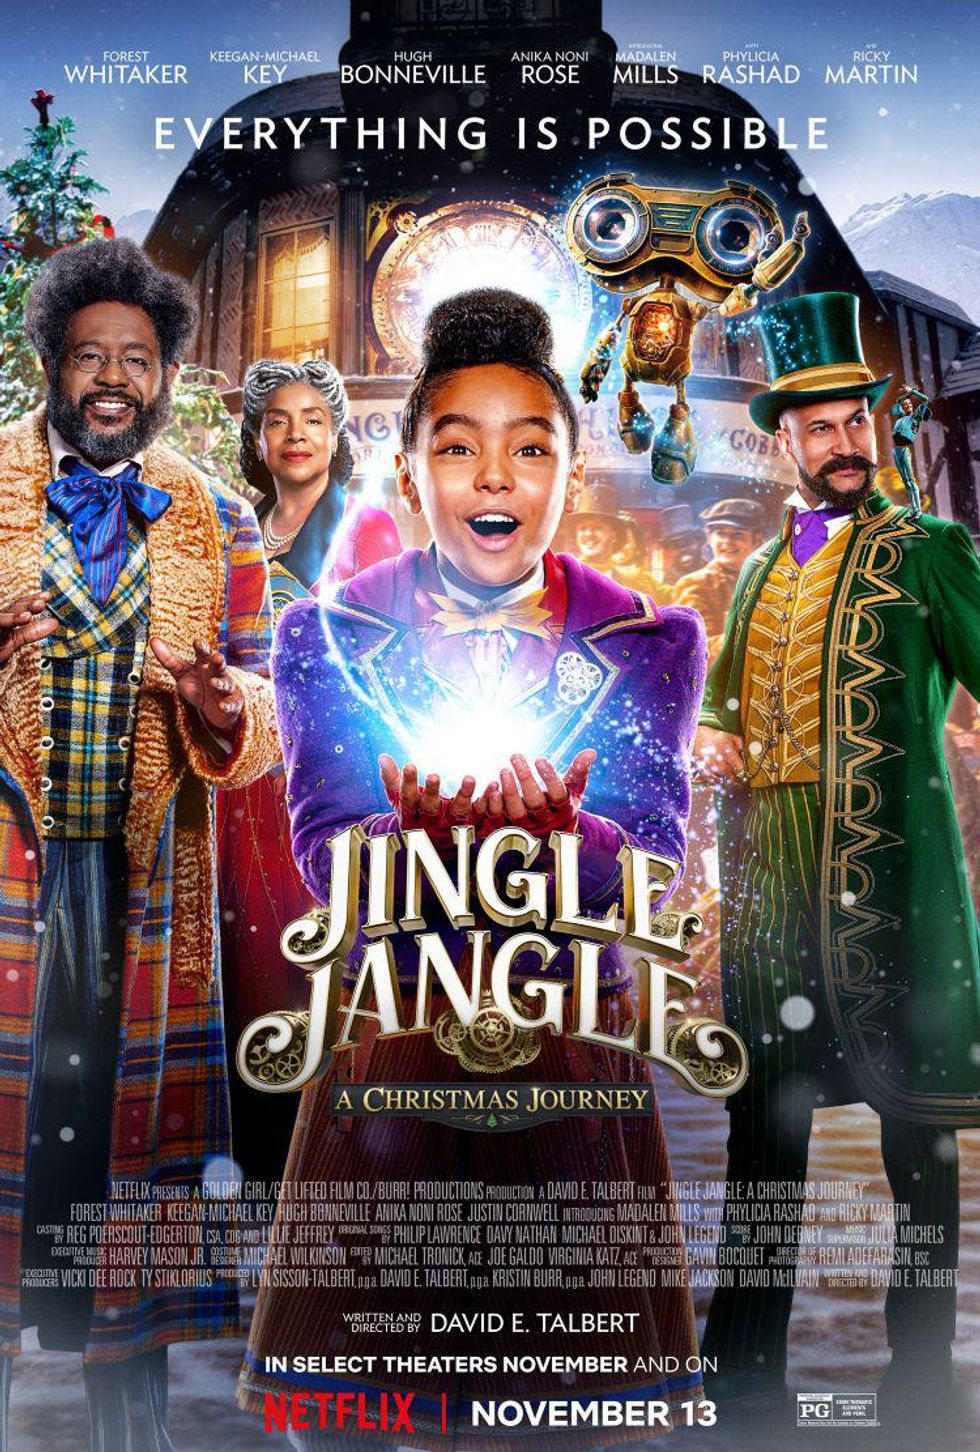 Ricky Martin Plays a Suavé Reanimated Toy in Netflix's 'Jingle Jangle'